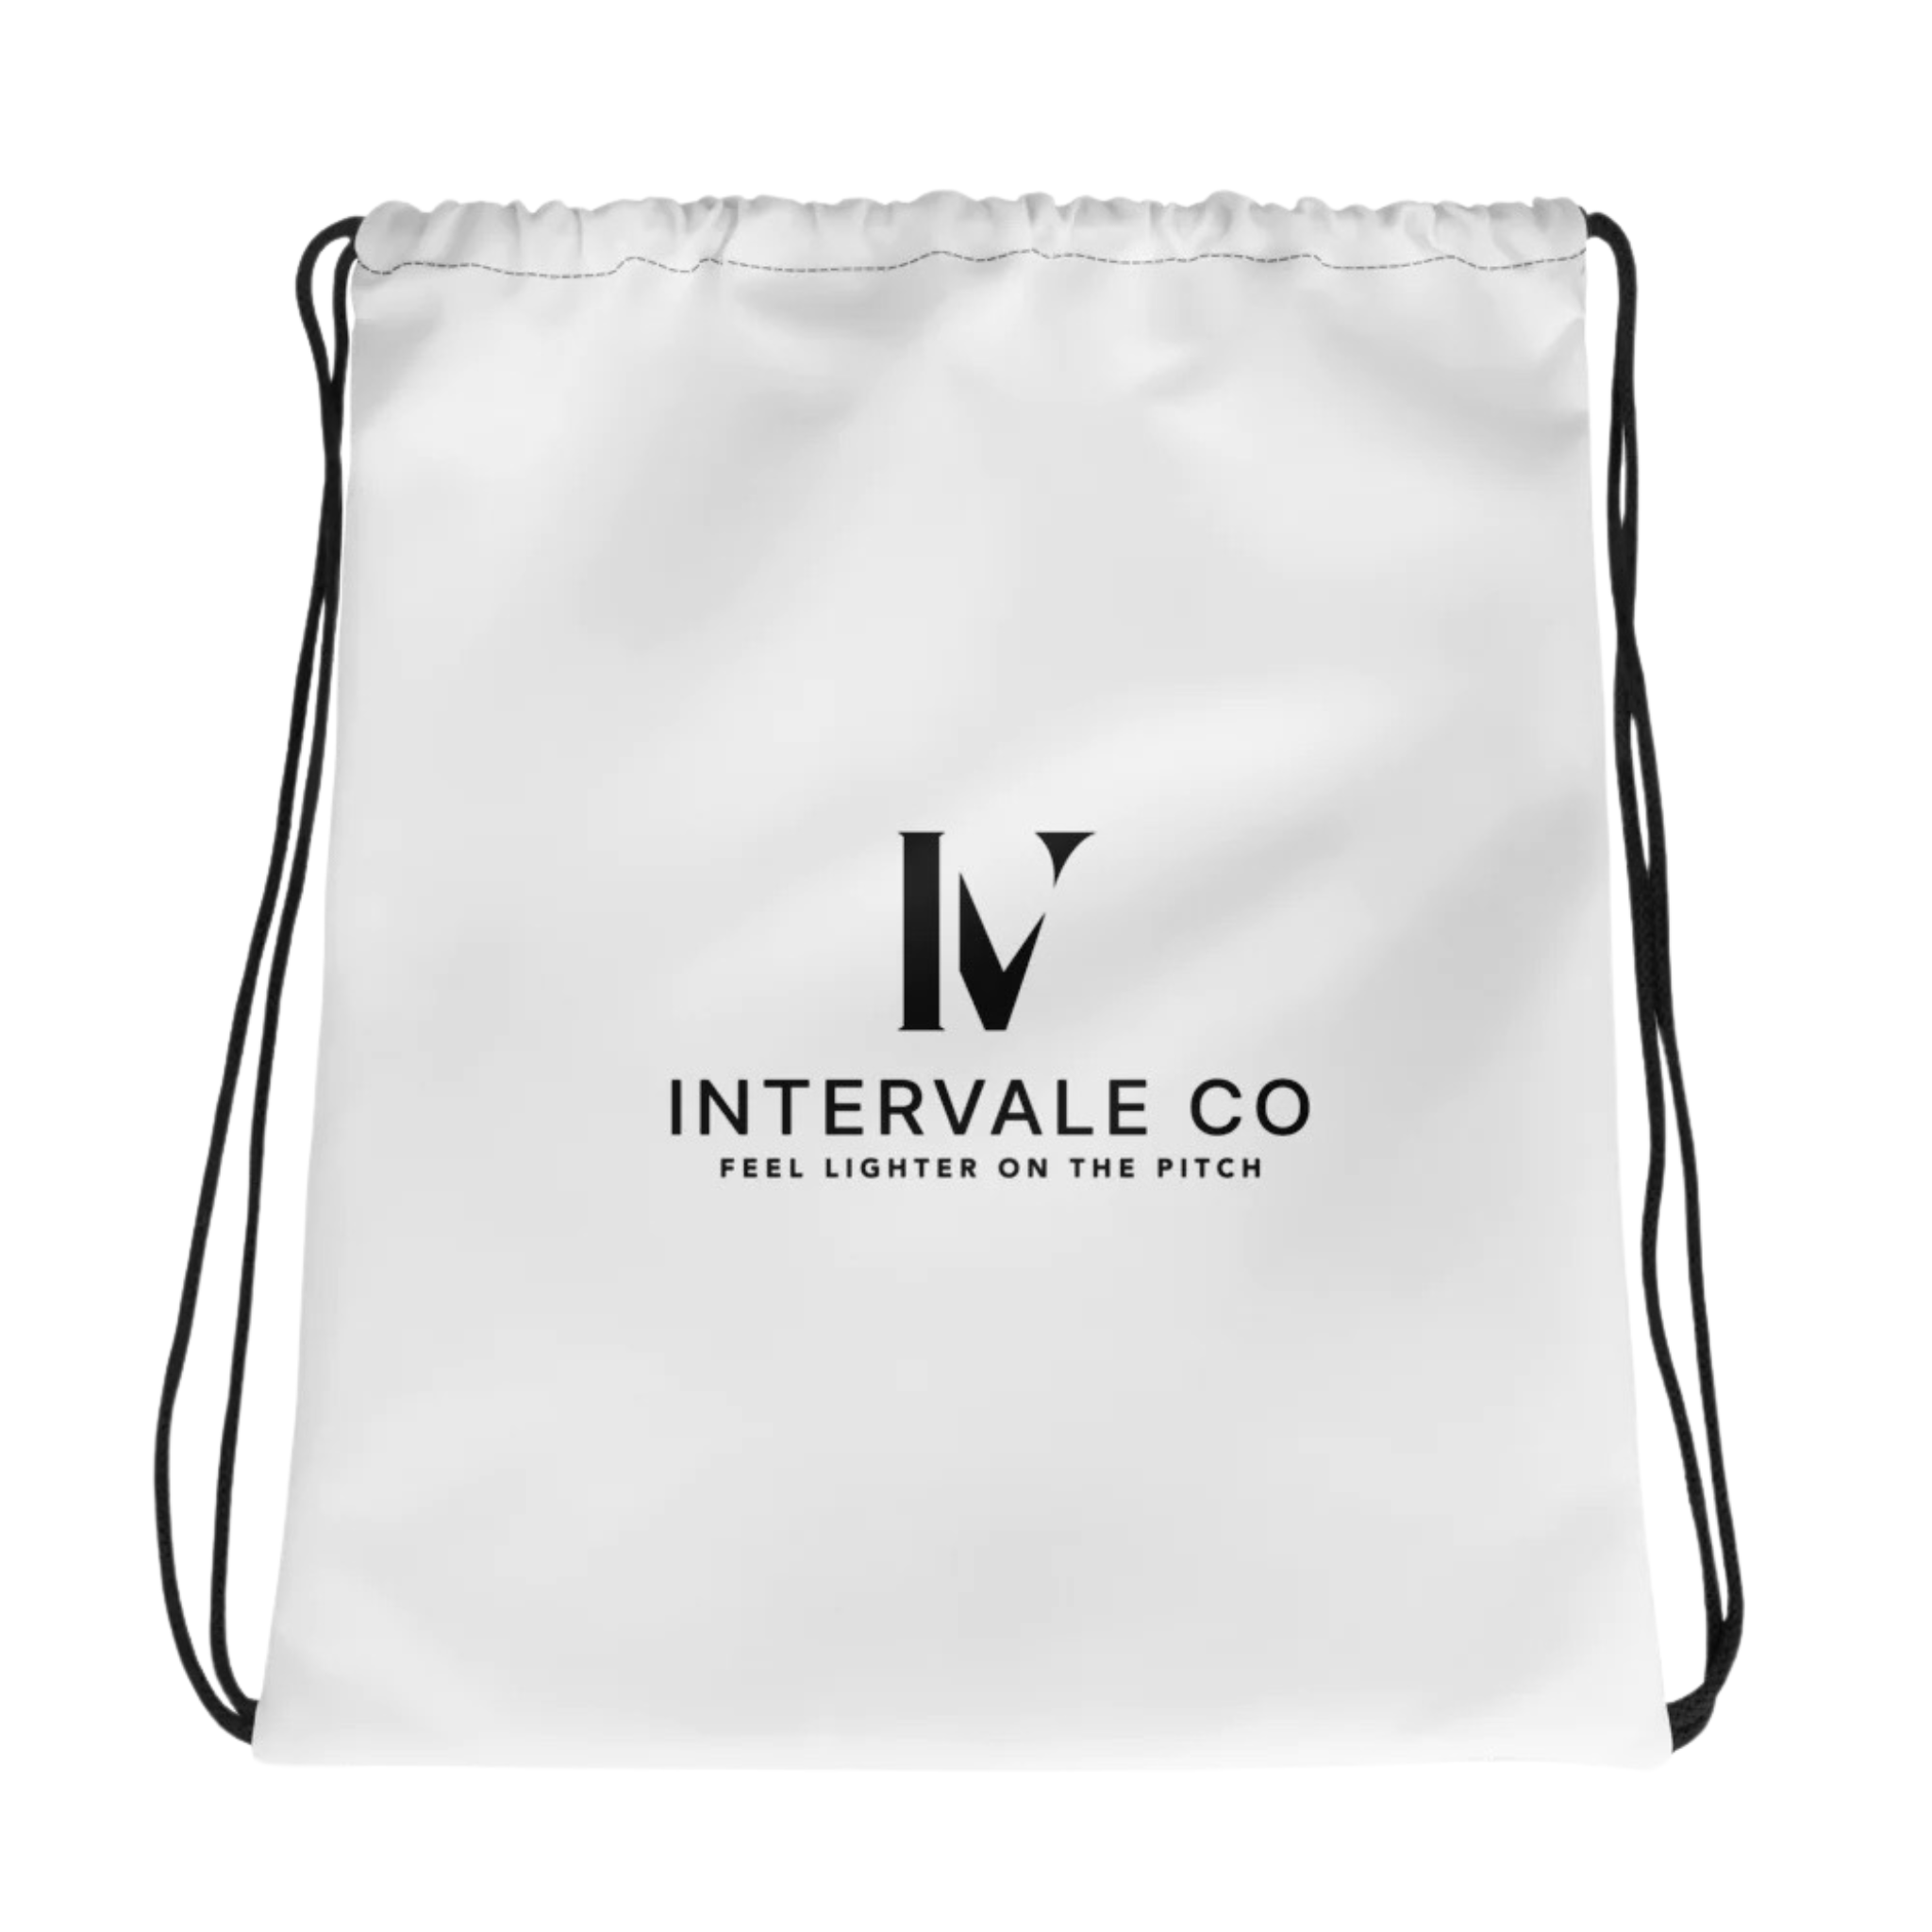 InterVale Mini Espinilleras - Blanco y Negro – InterVale Co